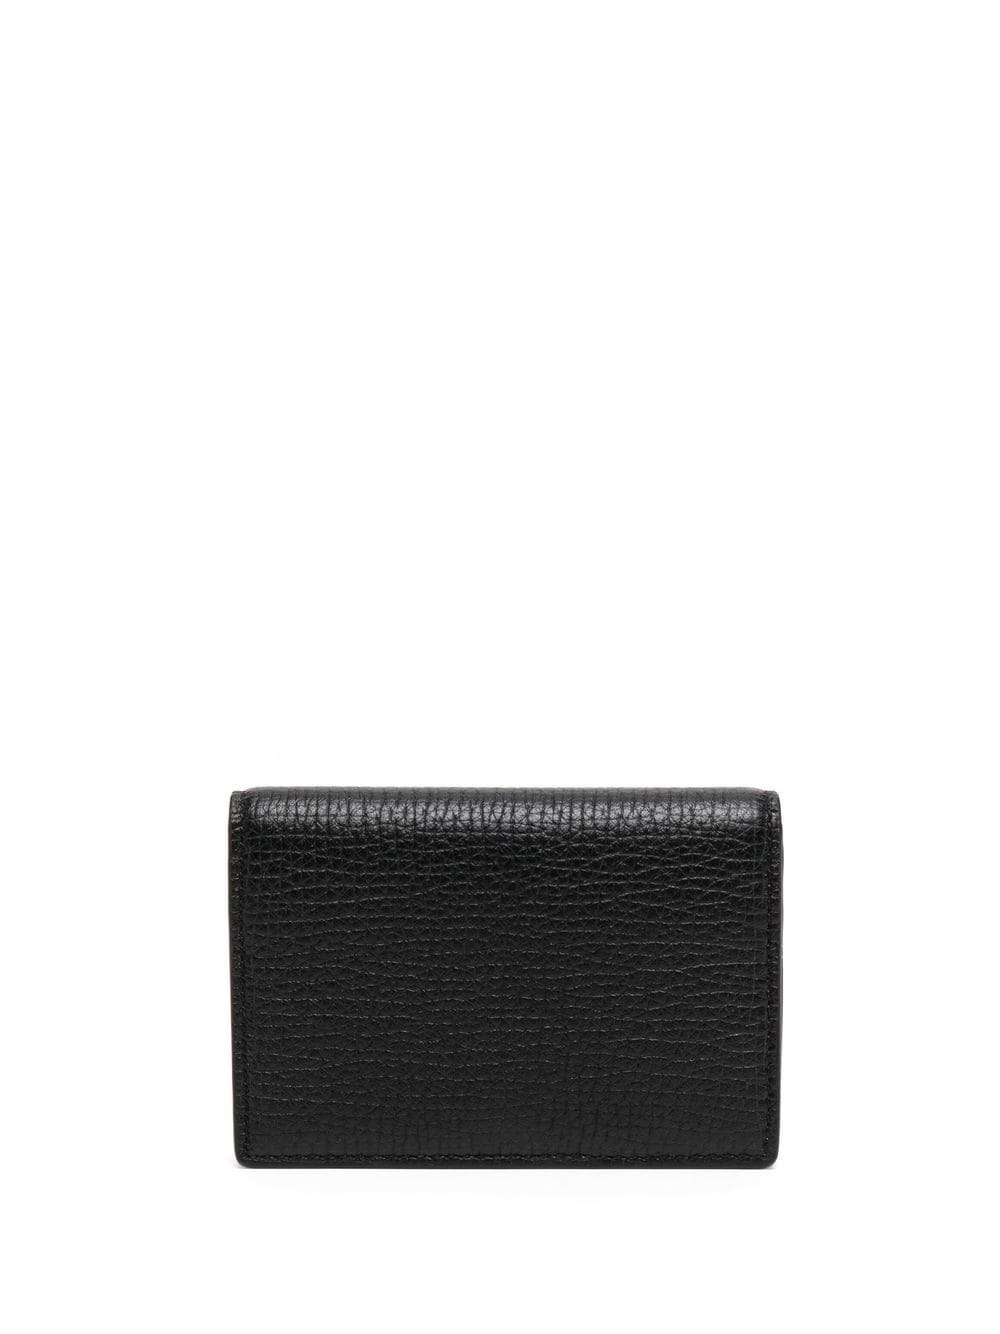 Smythson grained-leather coin purse - Black